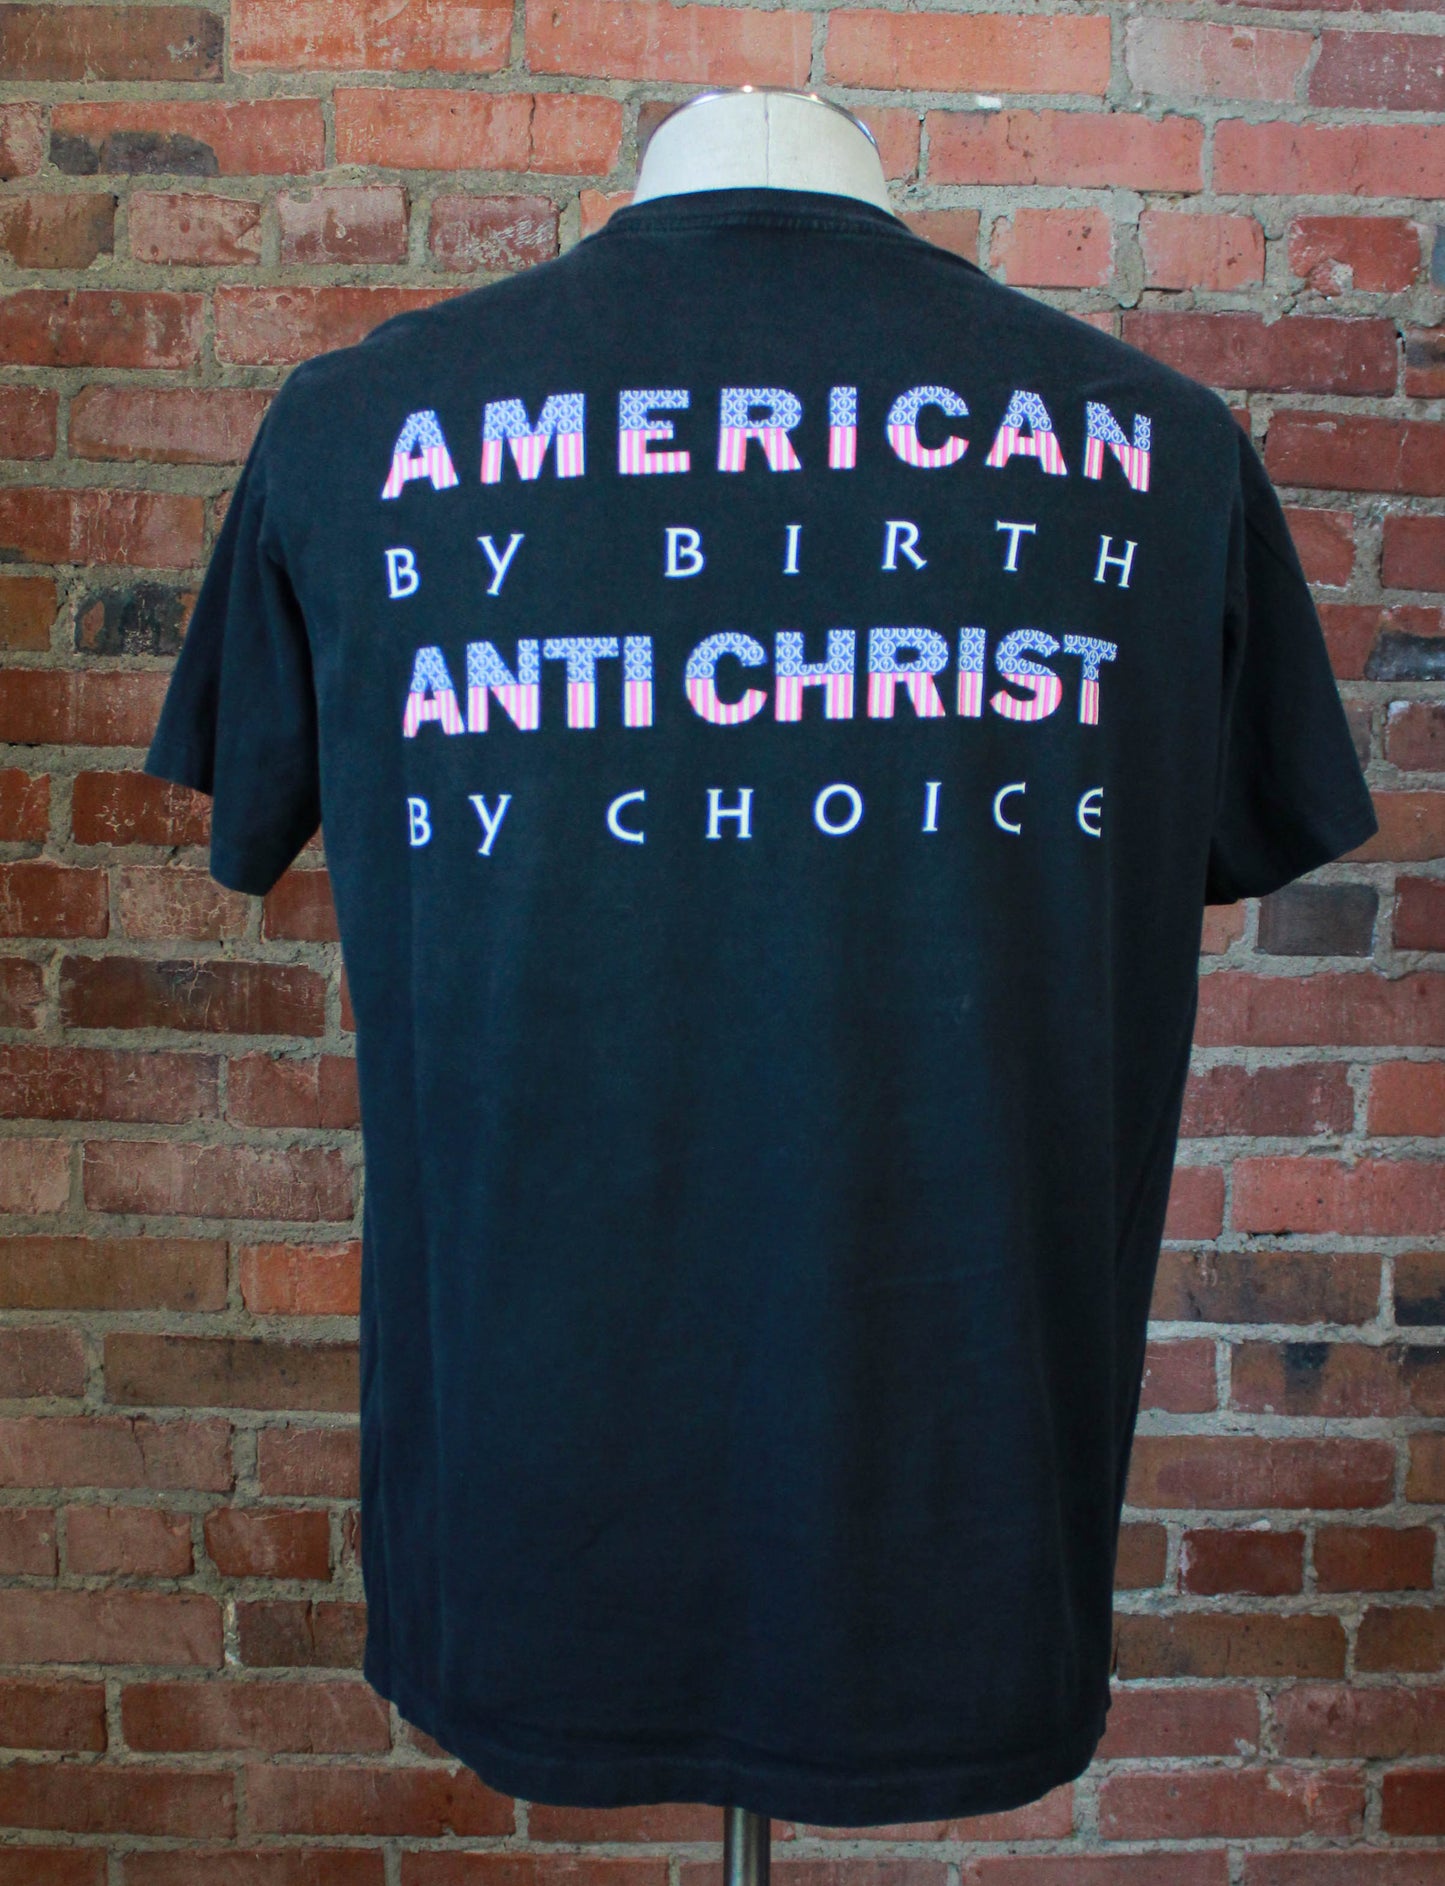 Vintage 1997 Marilyn Manson Concert T Shirt American Antichrist Black Unisex Large/XL